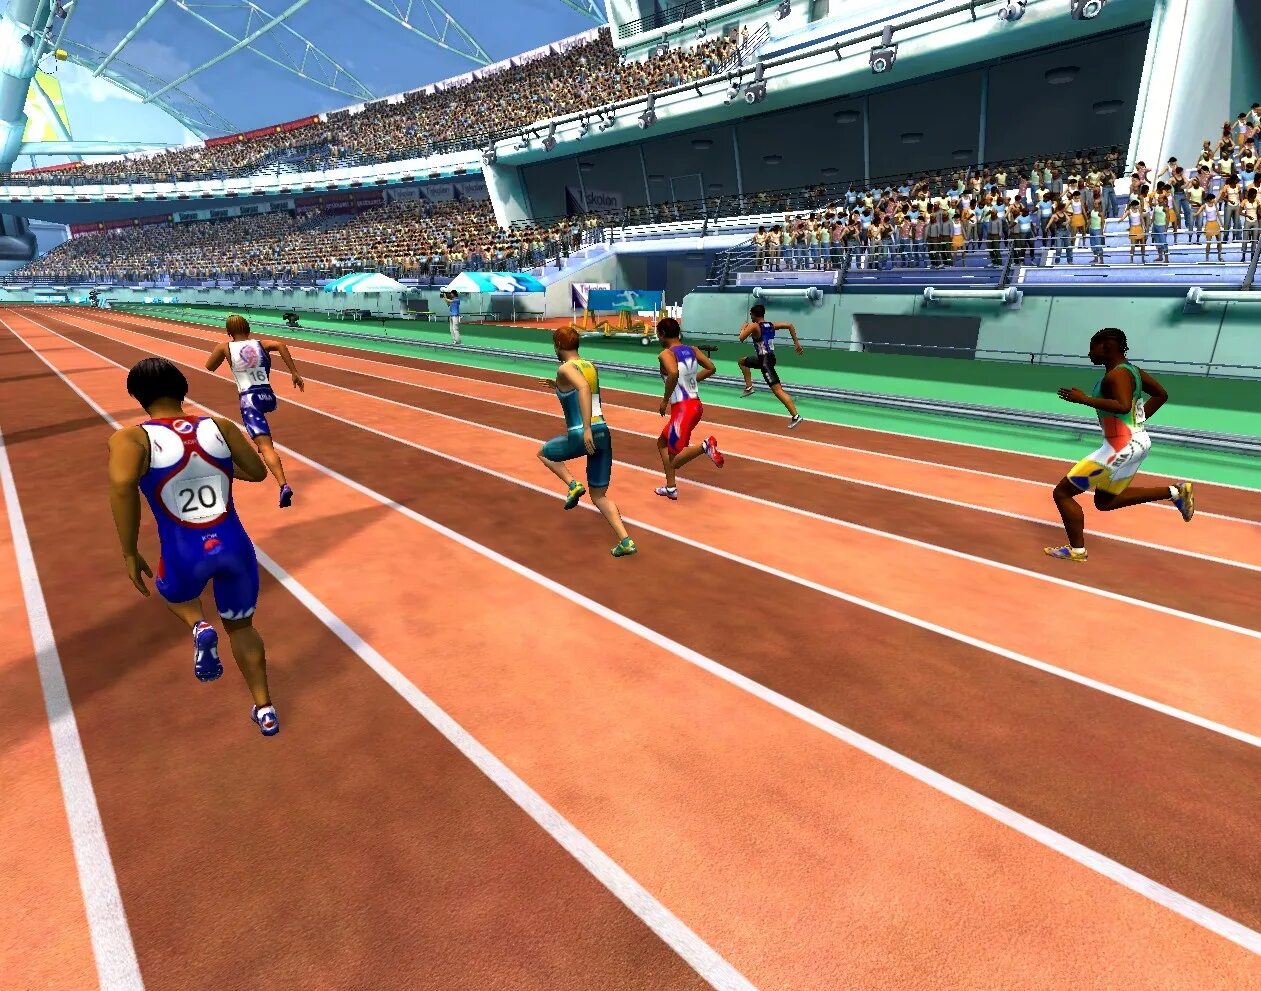 World champ игра. World Athletics игра Wii. Летние игры. Xbox 360 игры легкая атлетика. Track and field Athletics игра.